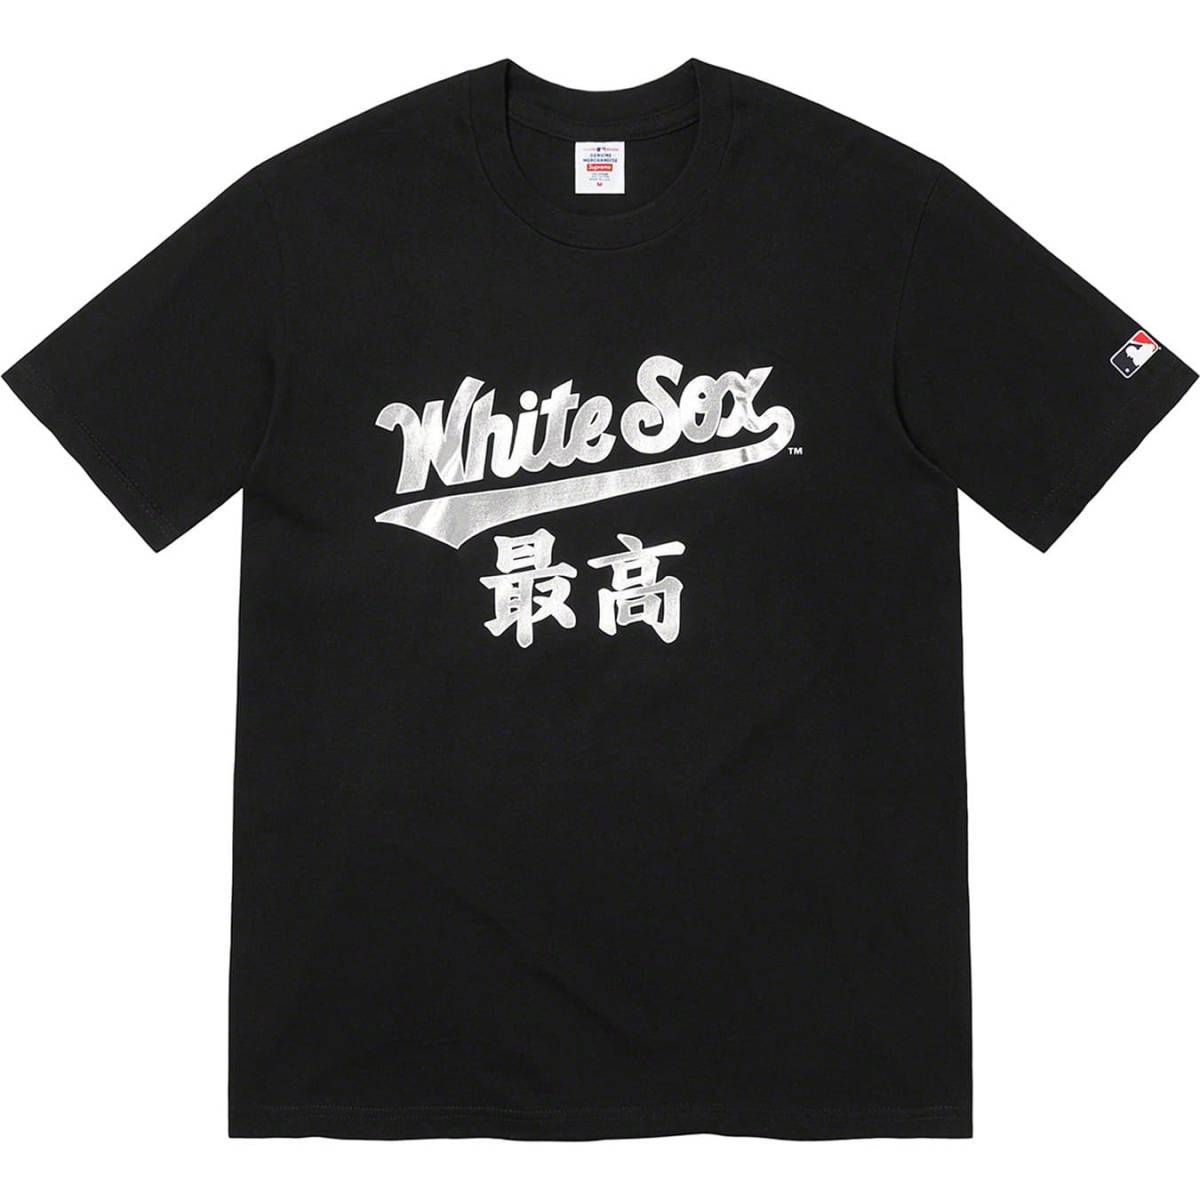 （XXL）未使用品 Supreme MLB Kanji Teams Tee White Sox Black 2XL メジャーリーグ ホワイトソックス Tシャツ 黒 シルバー BOX LOGO 漢字